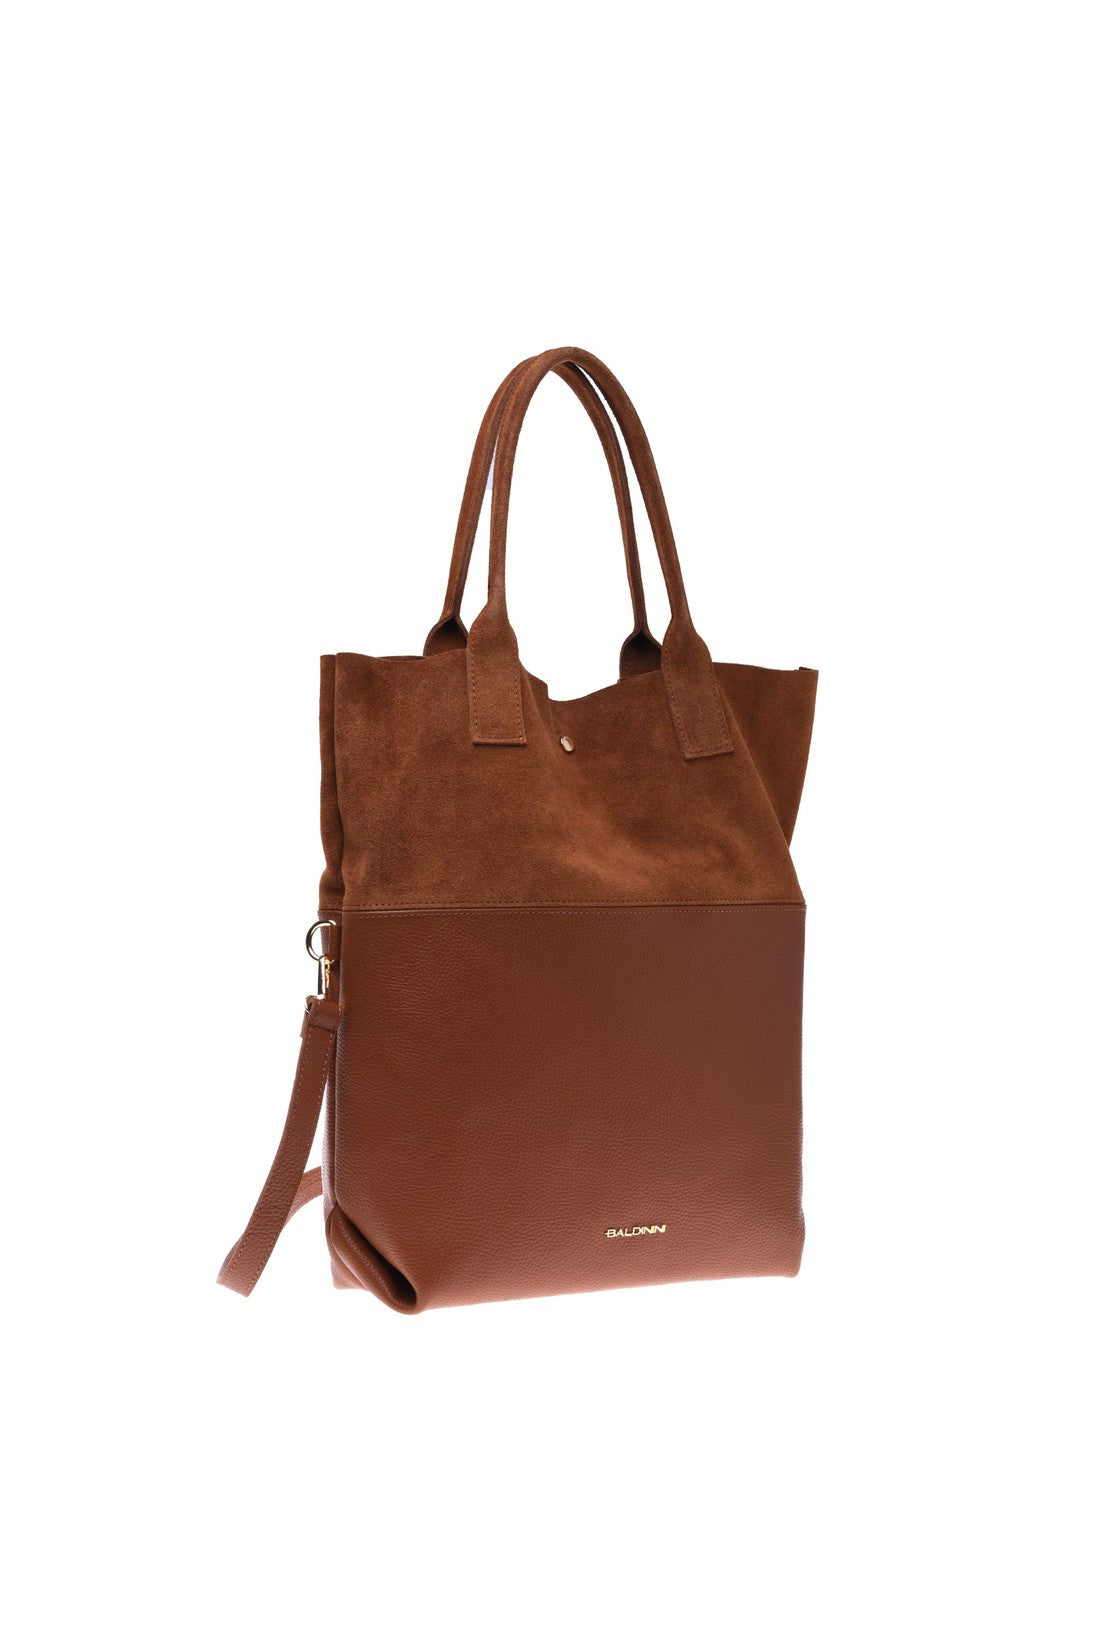 Shoulder bag in tan suede and calfskin